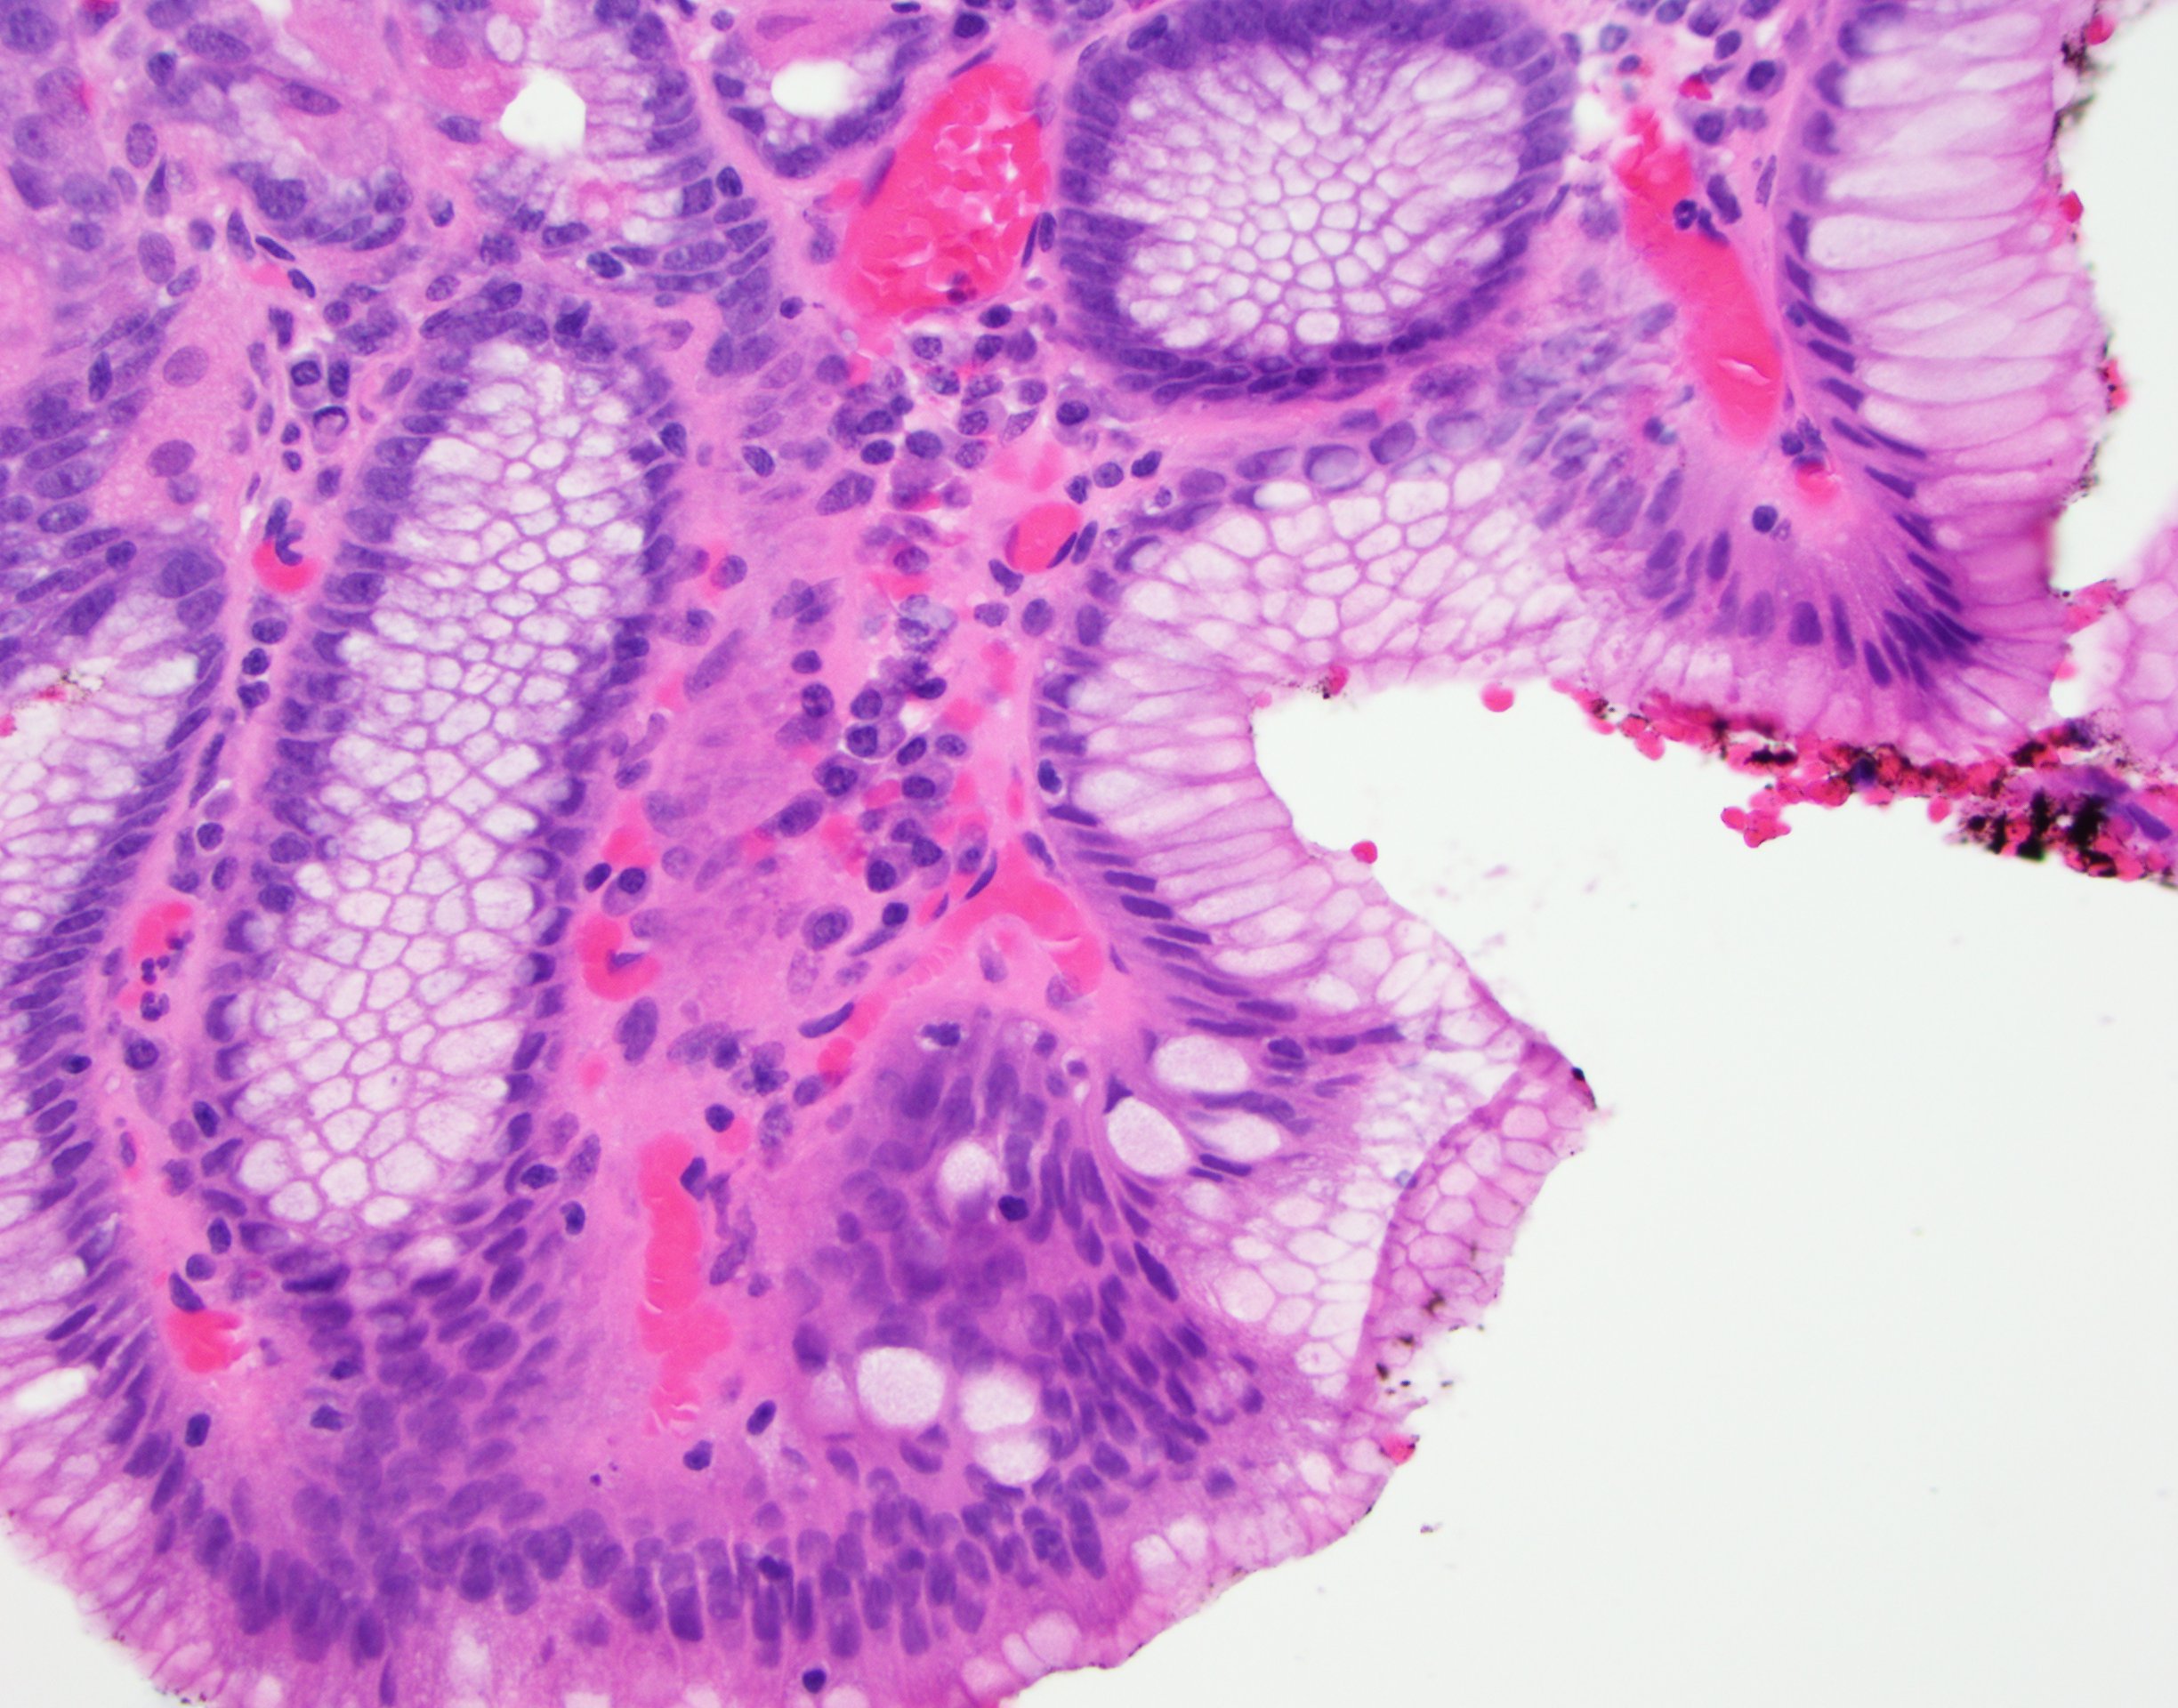 barretts esophagus histology